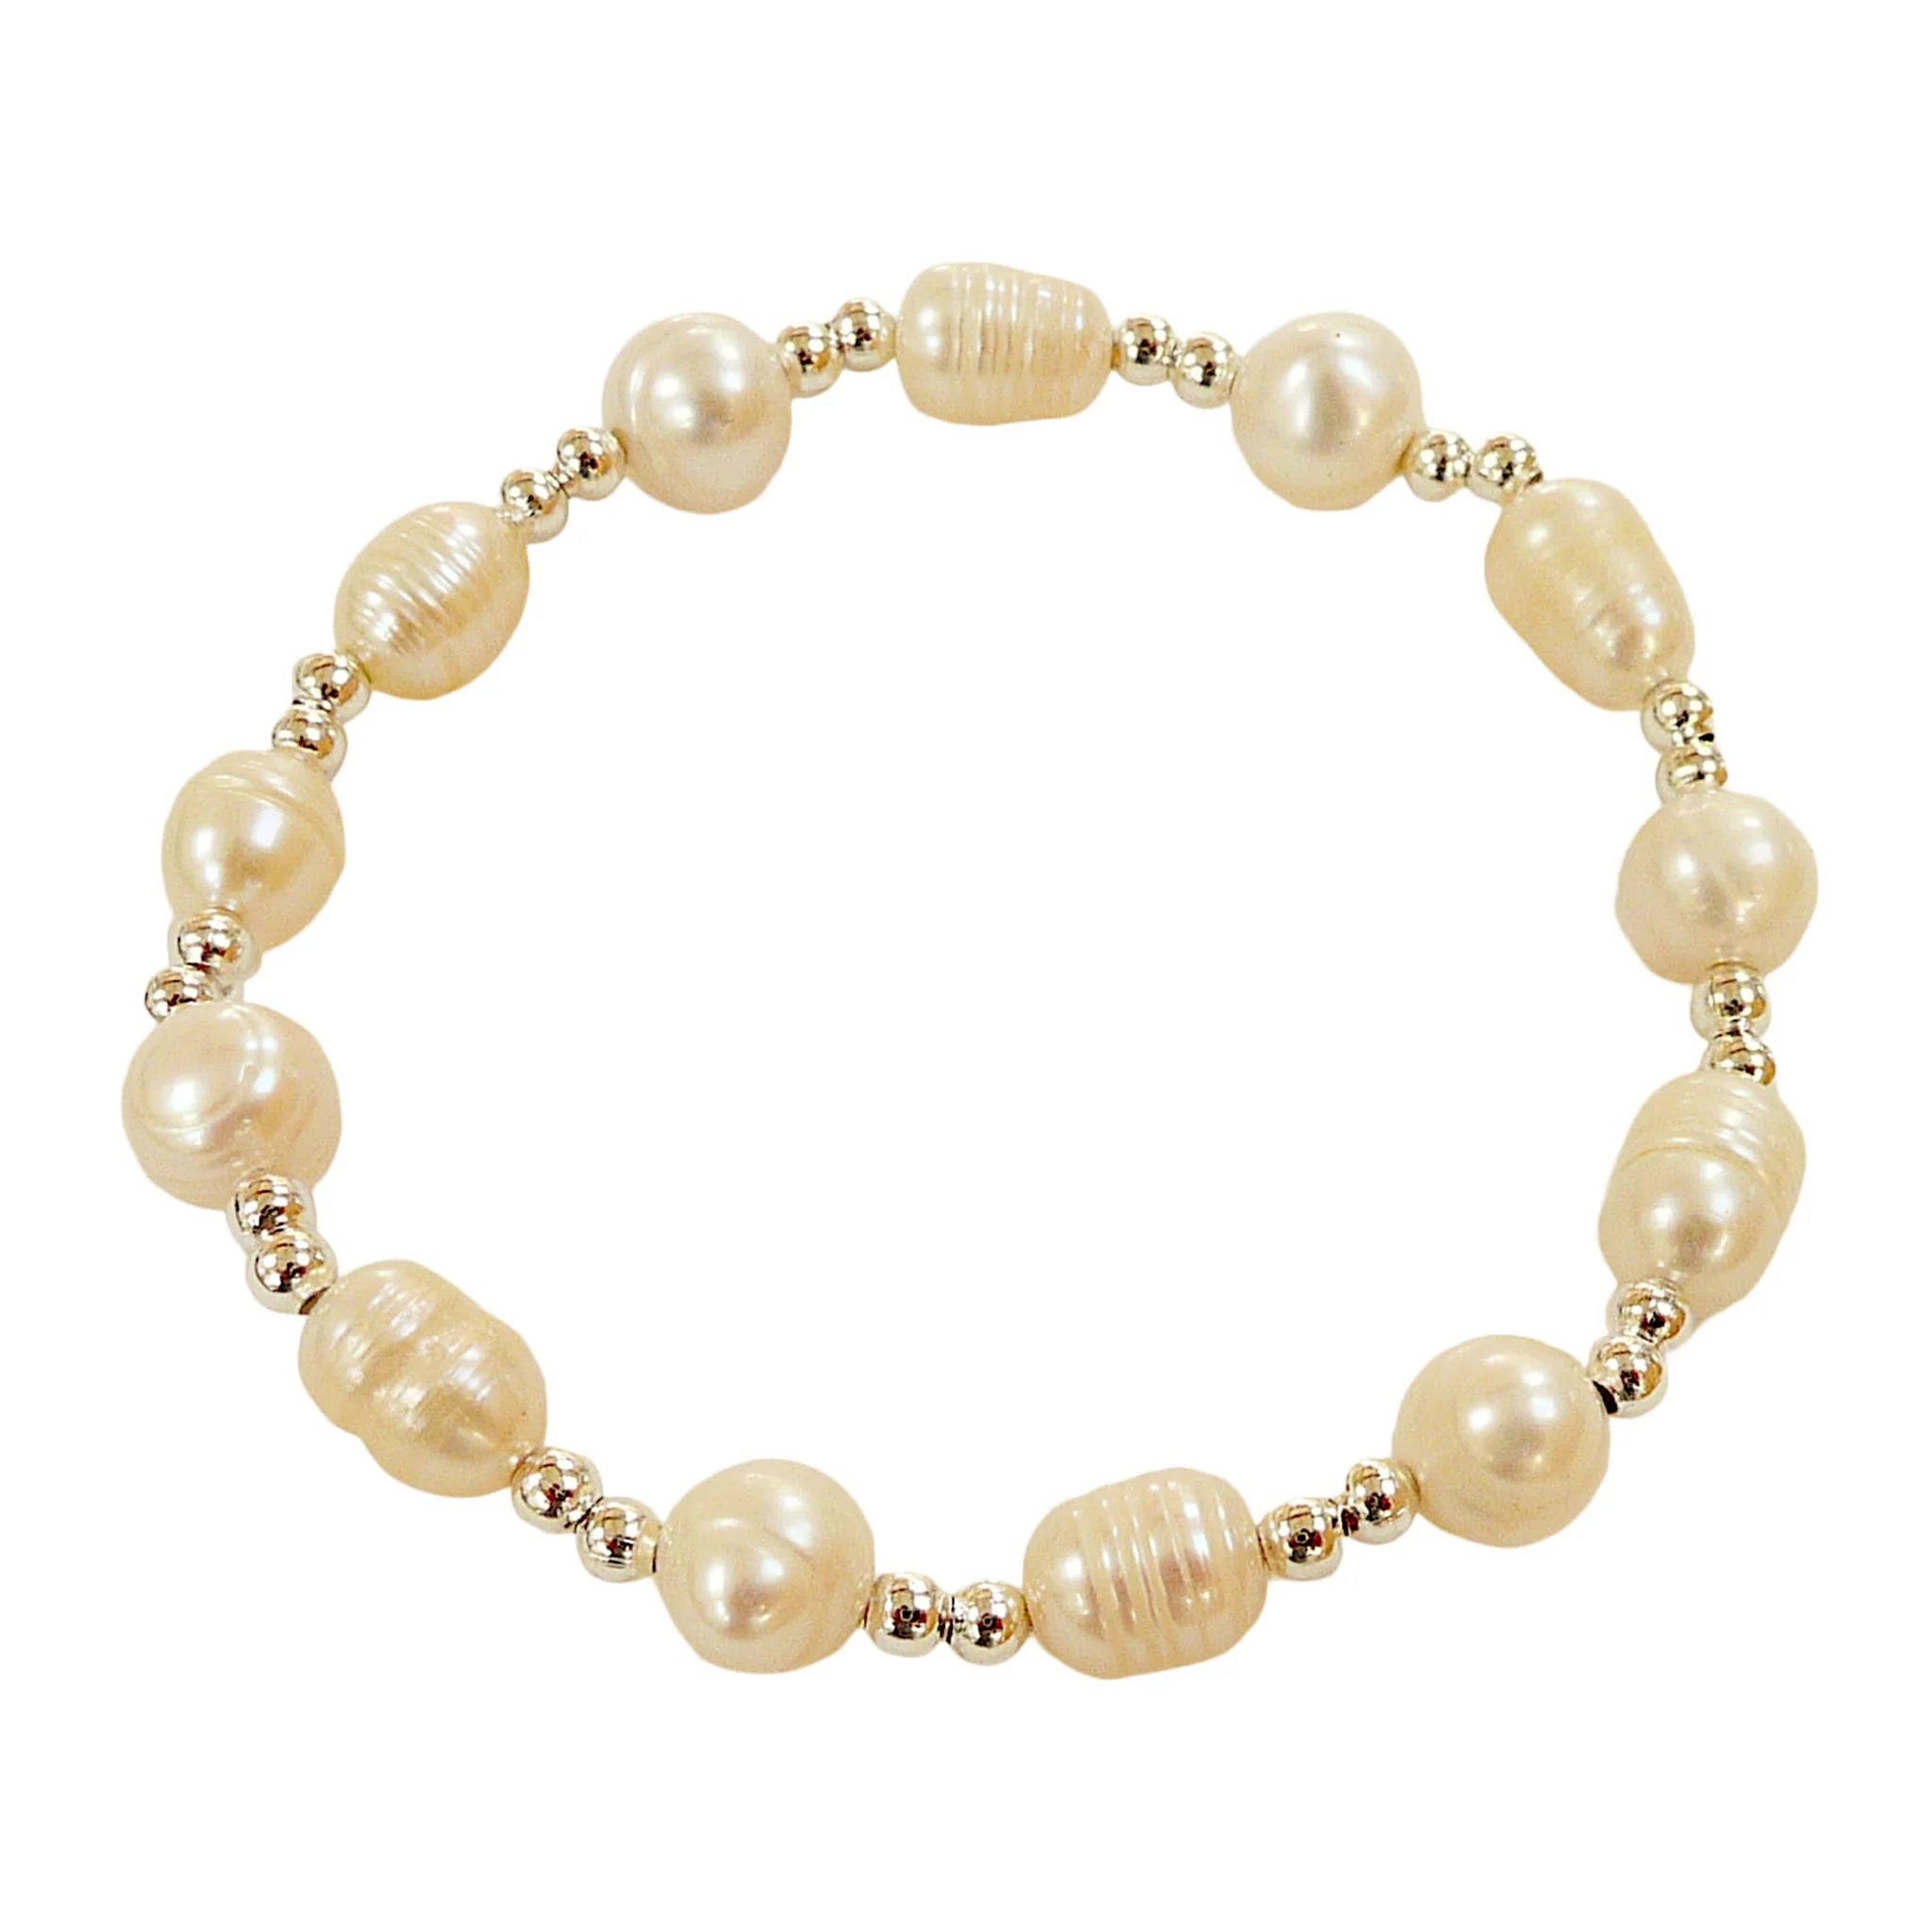 Pearl Silver Findings Bracelet - The Nancy Smillie Shop - Art, Jewellery & Designer Gifts Glasgow